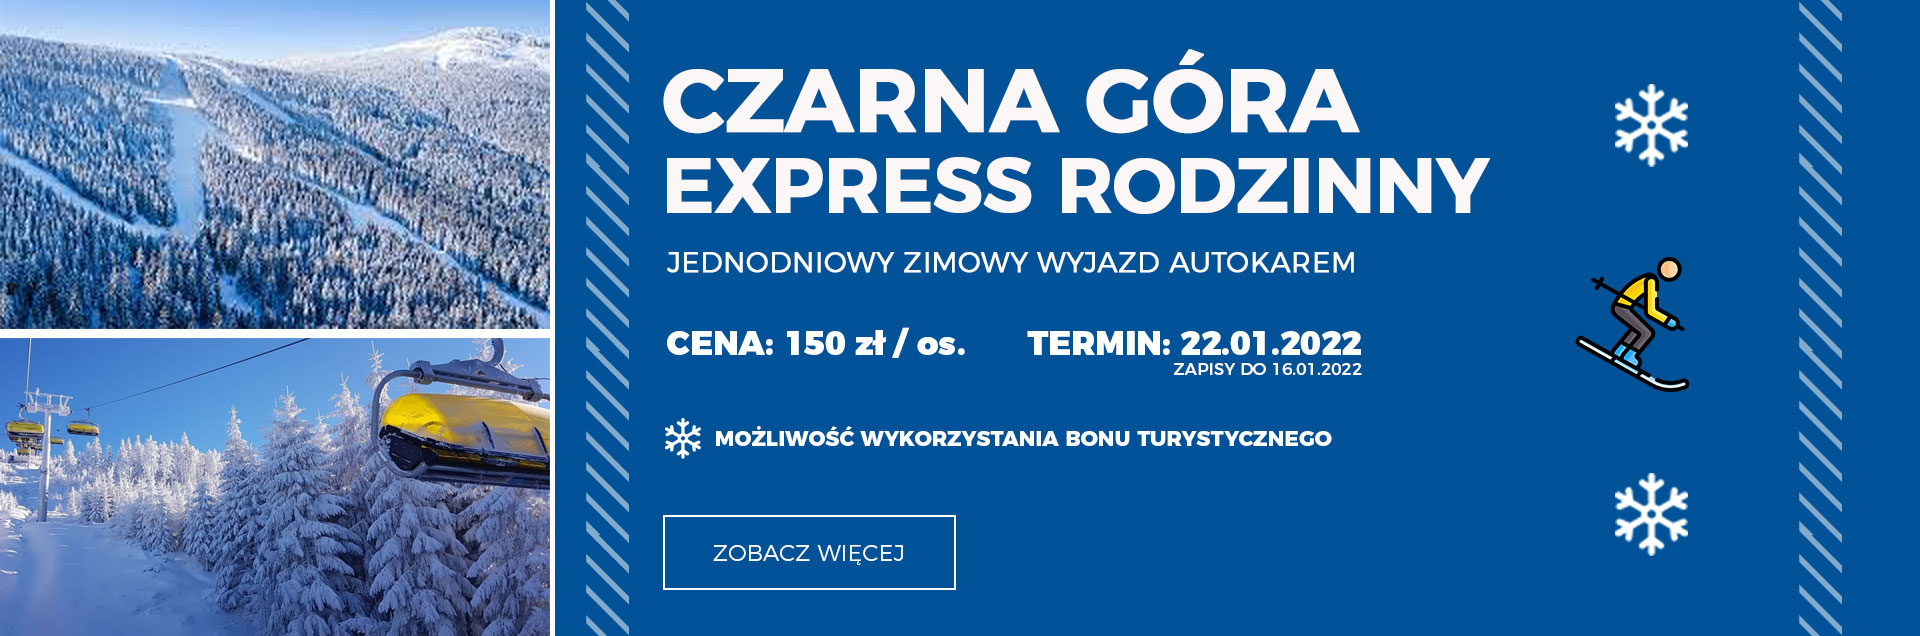 https://compasstravel.pl/o/421/CZARNA-GORA-EXPRESS-RODZINNY